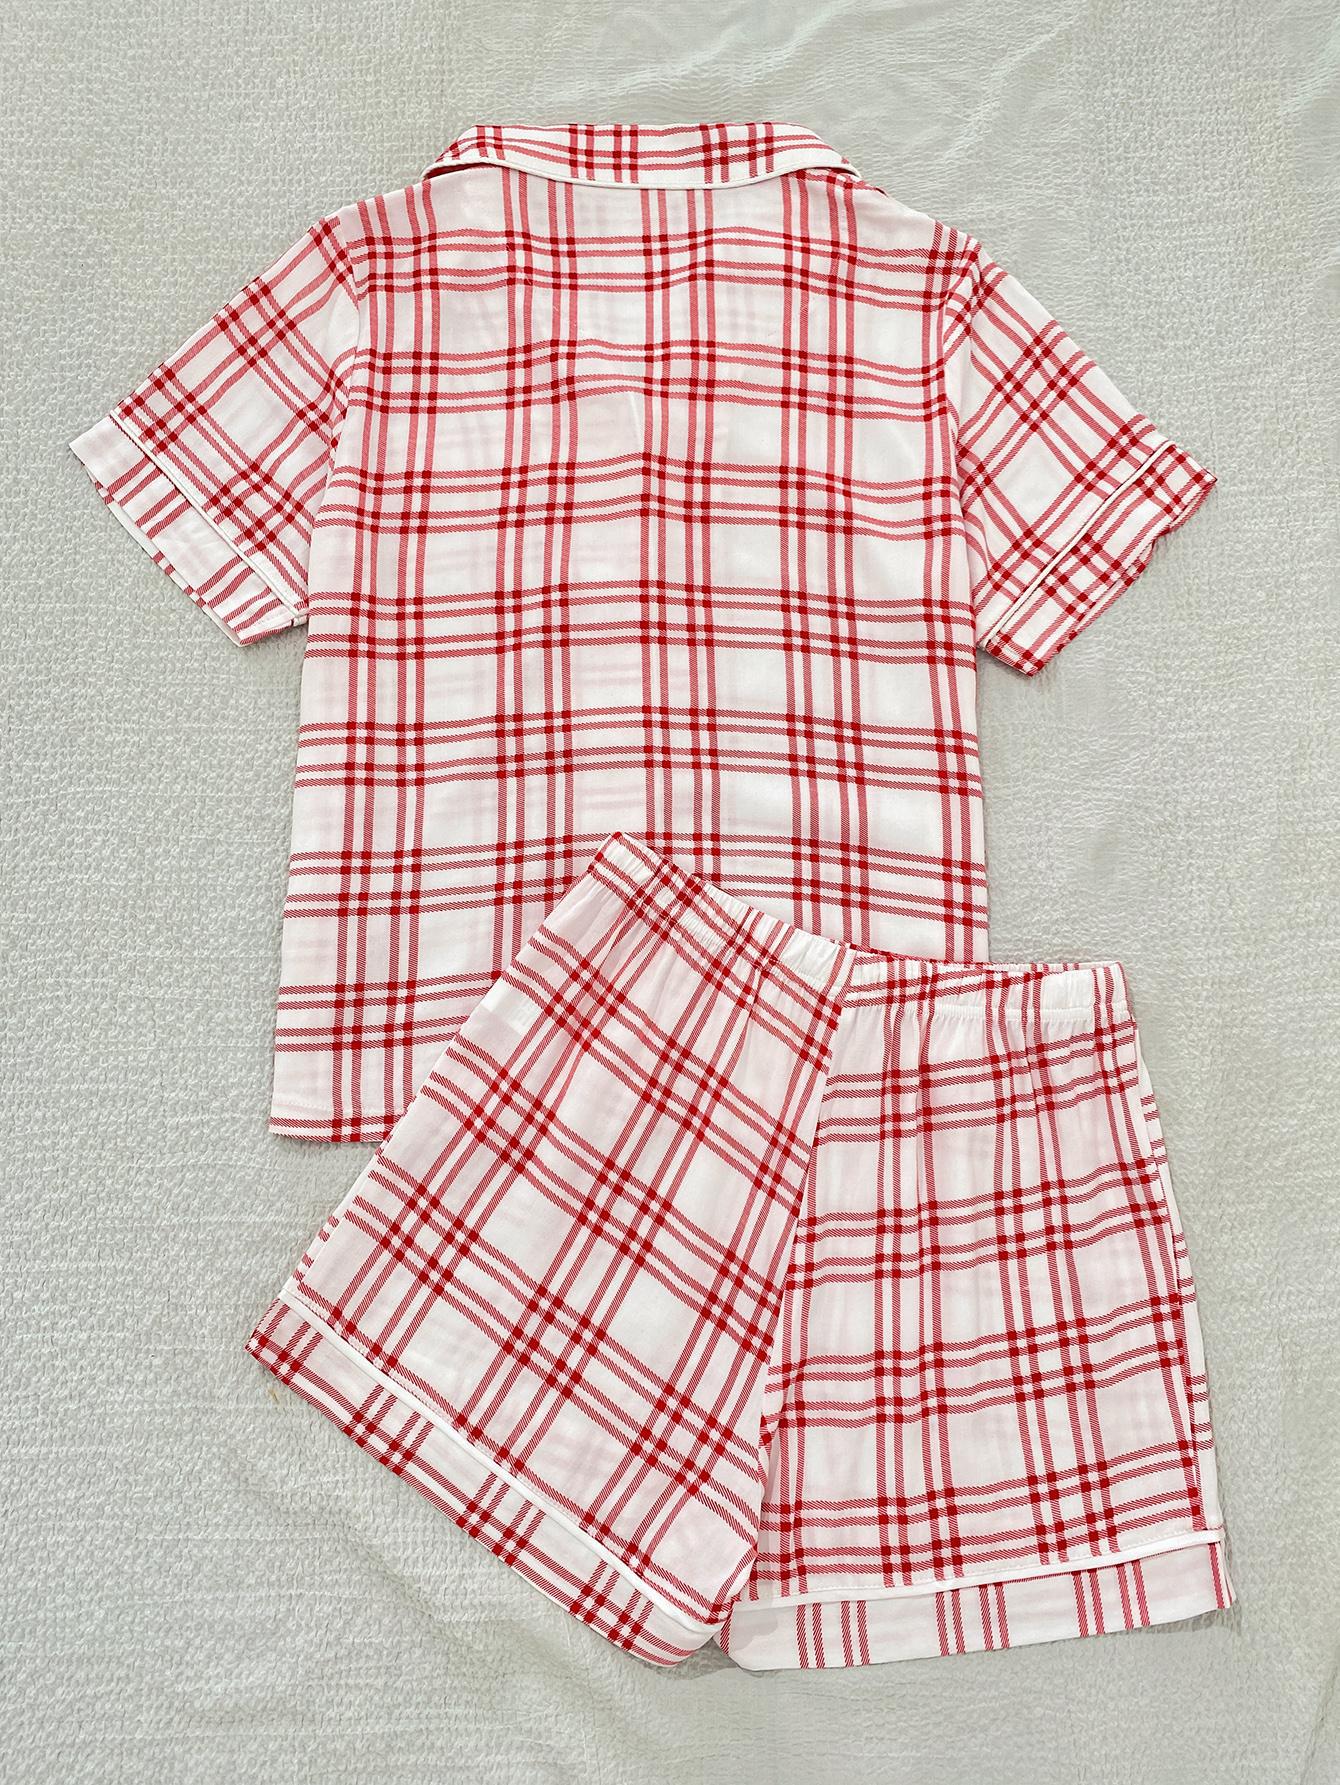 Red tartan pajamas with lapel collar